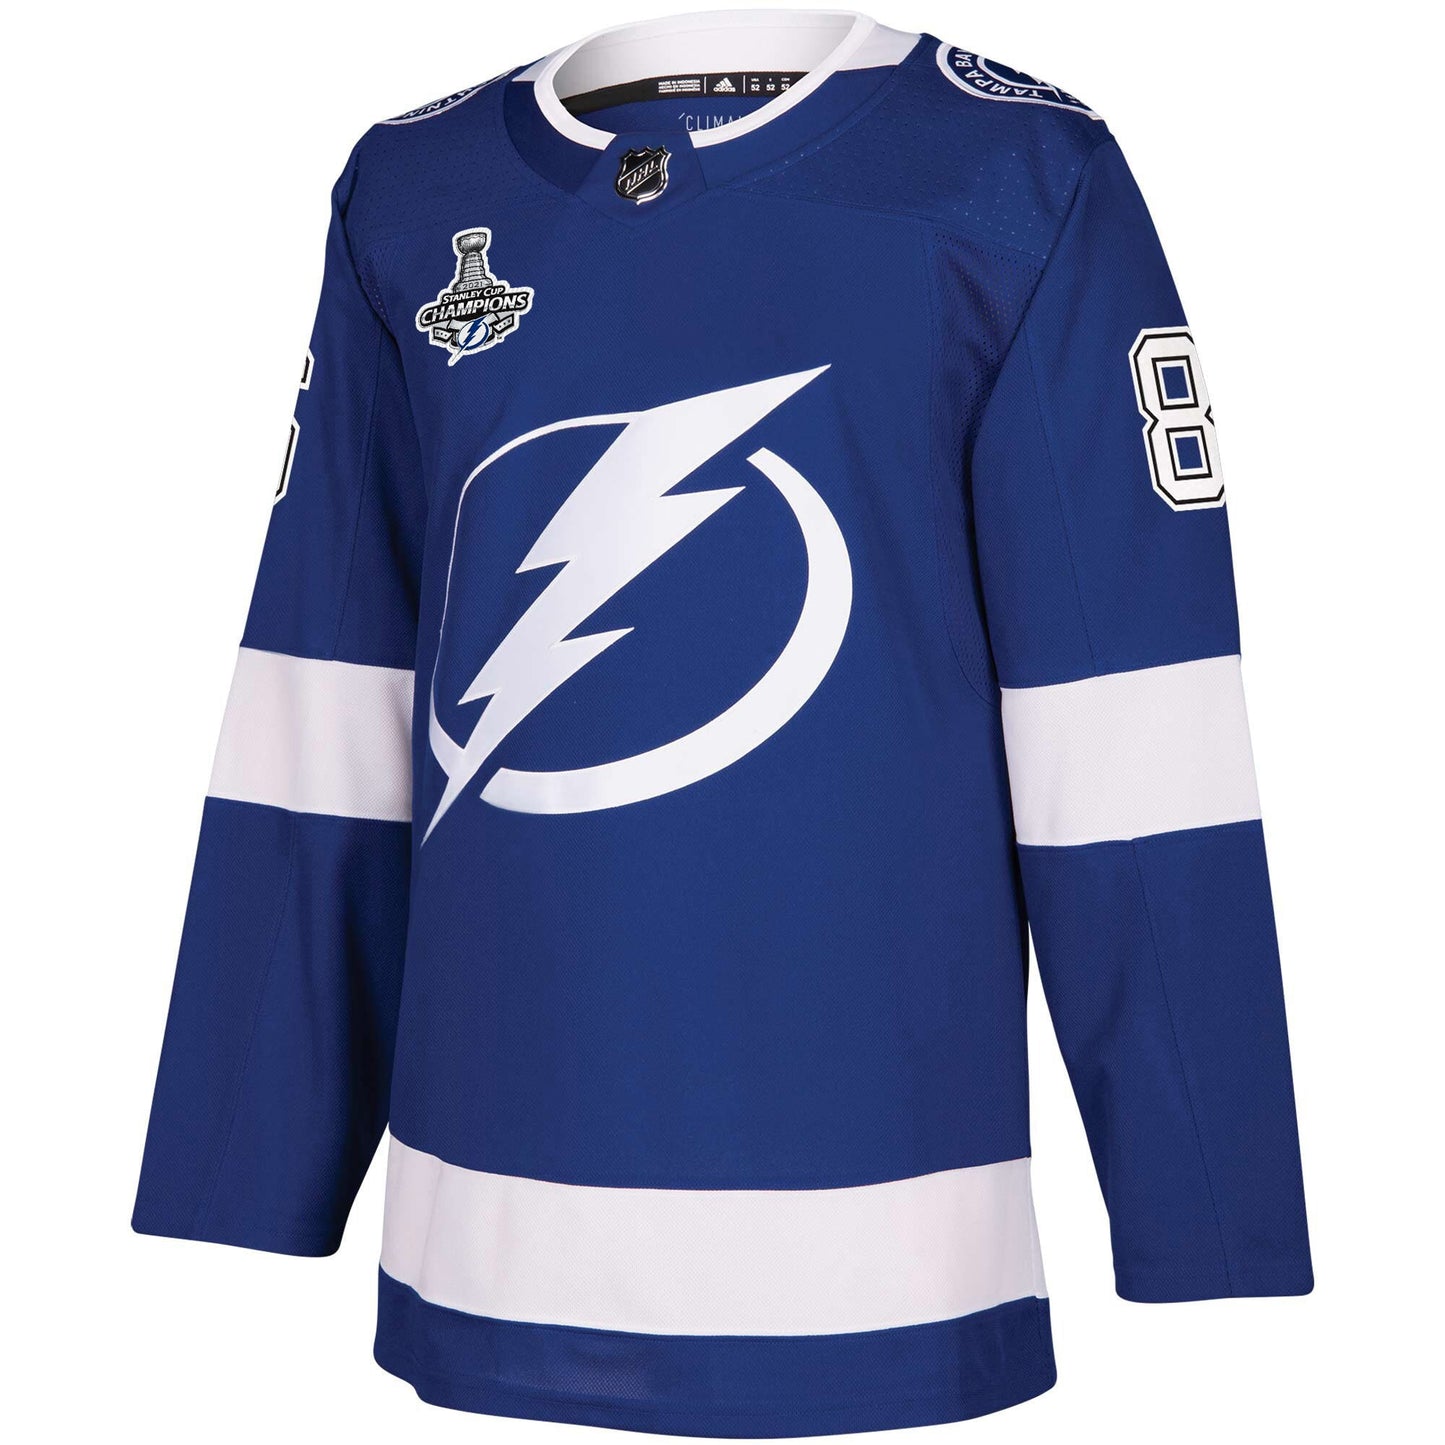 Nikita Kucherov Tampa Bay Lightning adidas 2021 Stanley Cup Champions Authentic Player Jersey - Blue